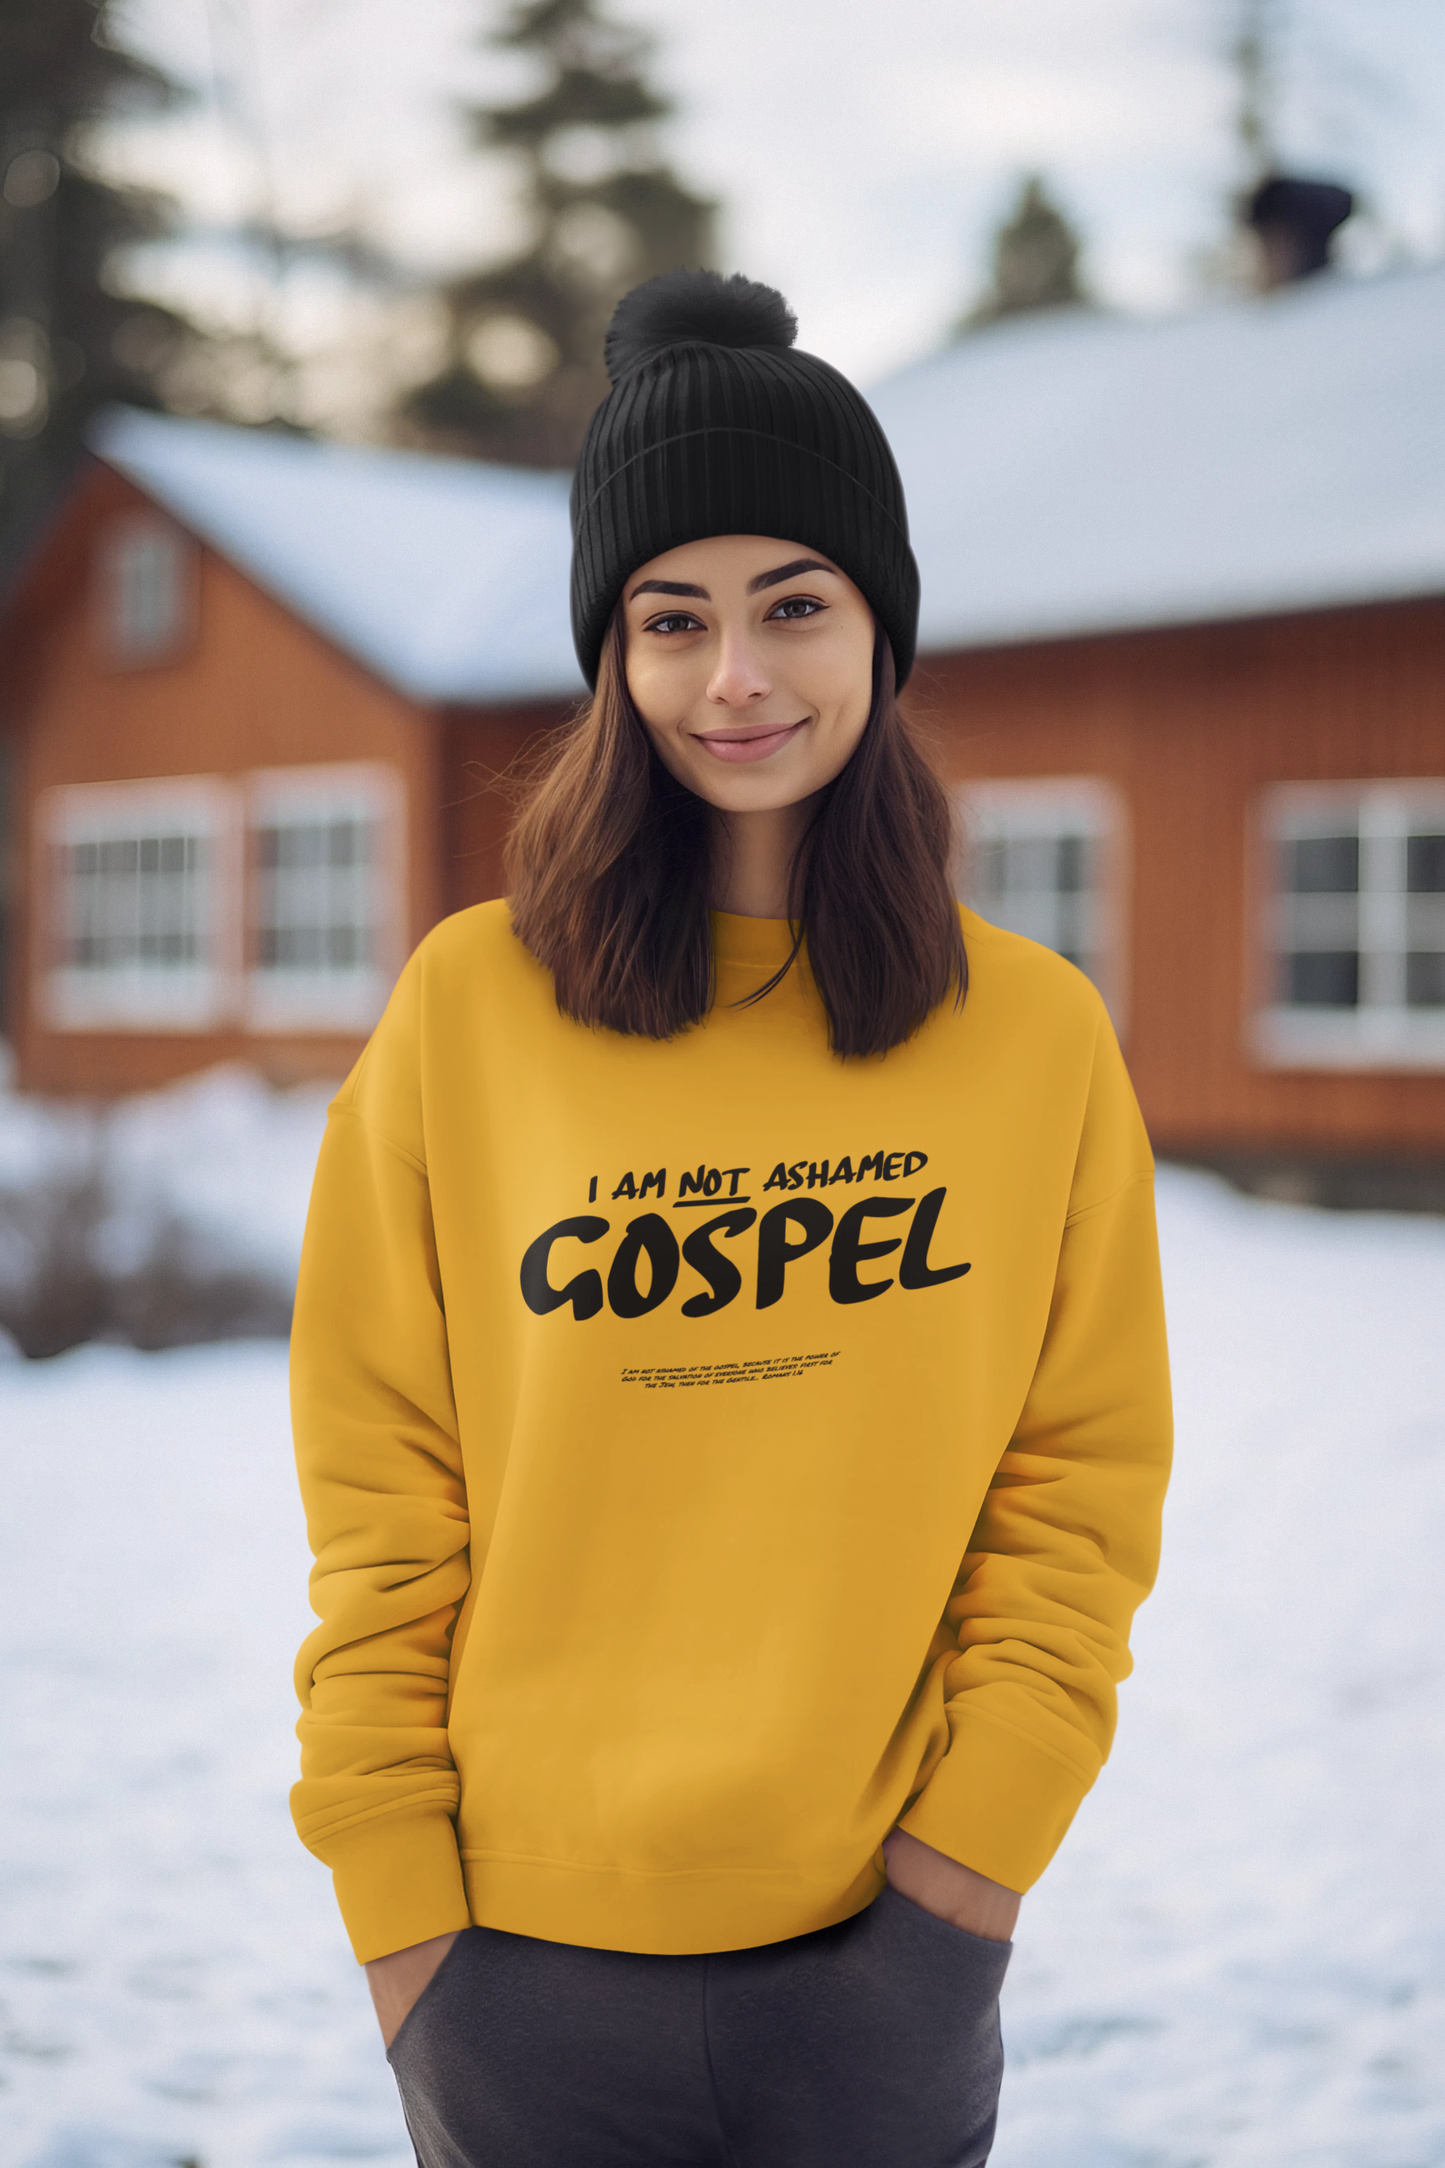 I am not ashamed of the Gospel. Sweatshirt.